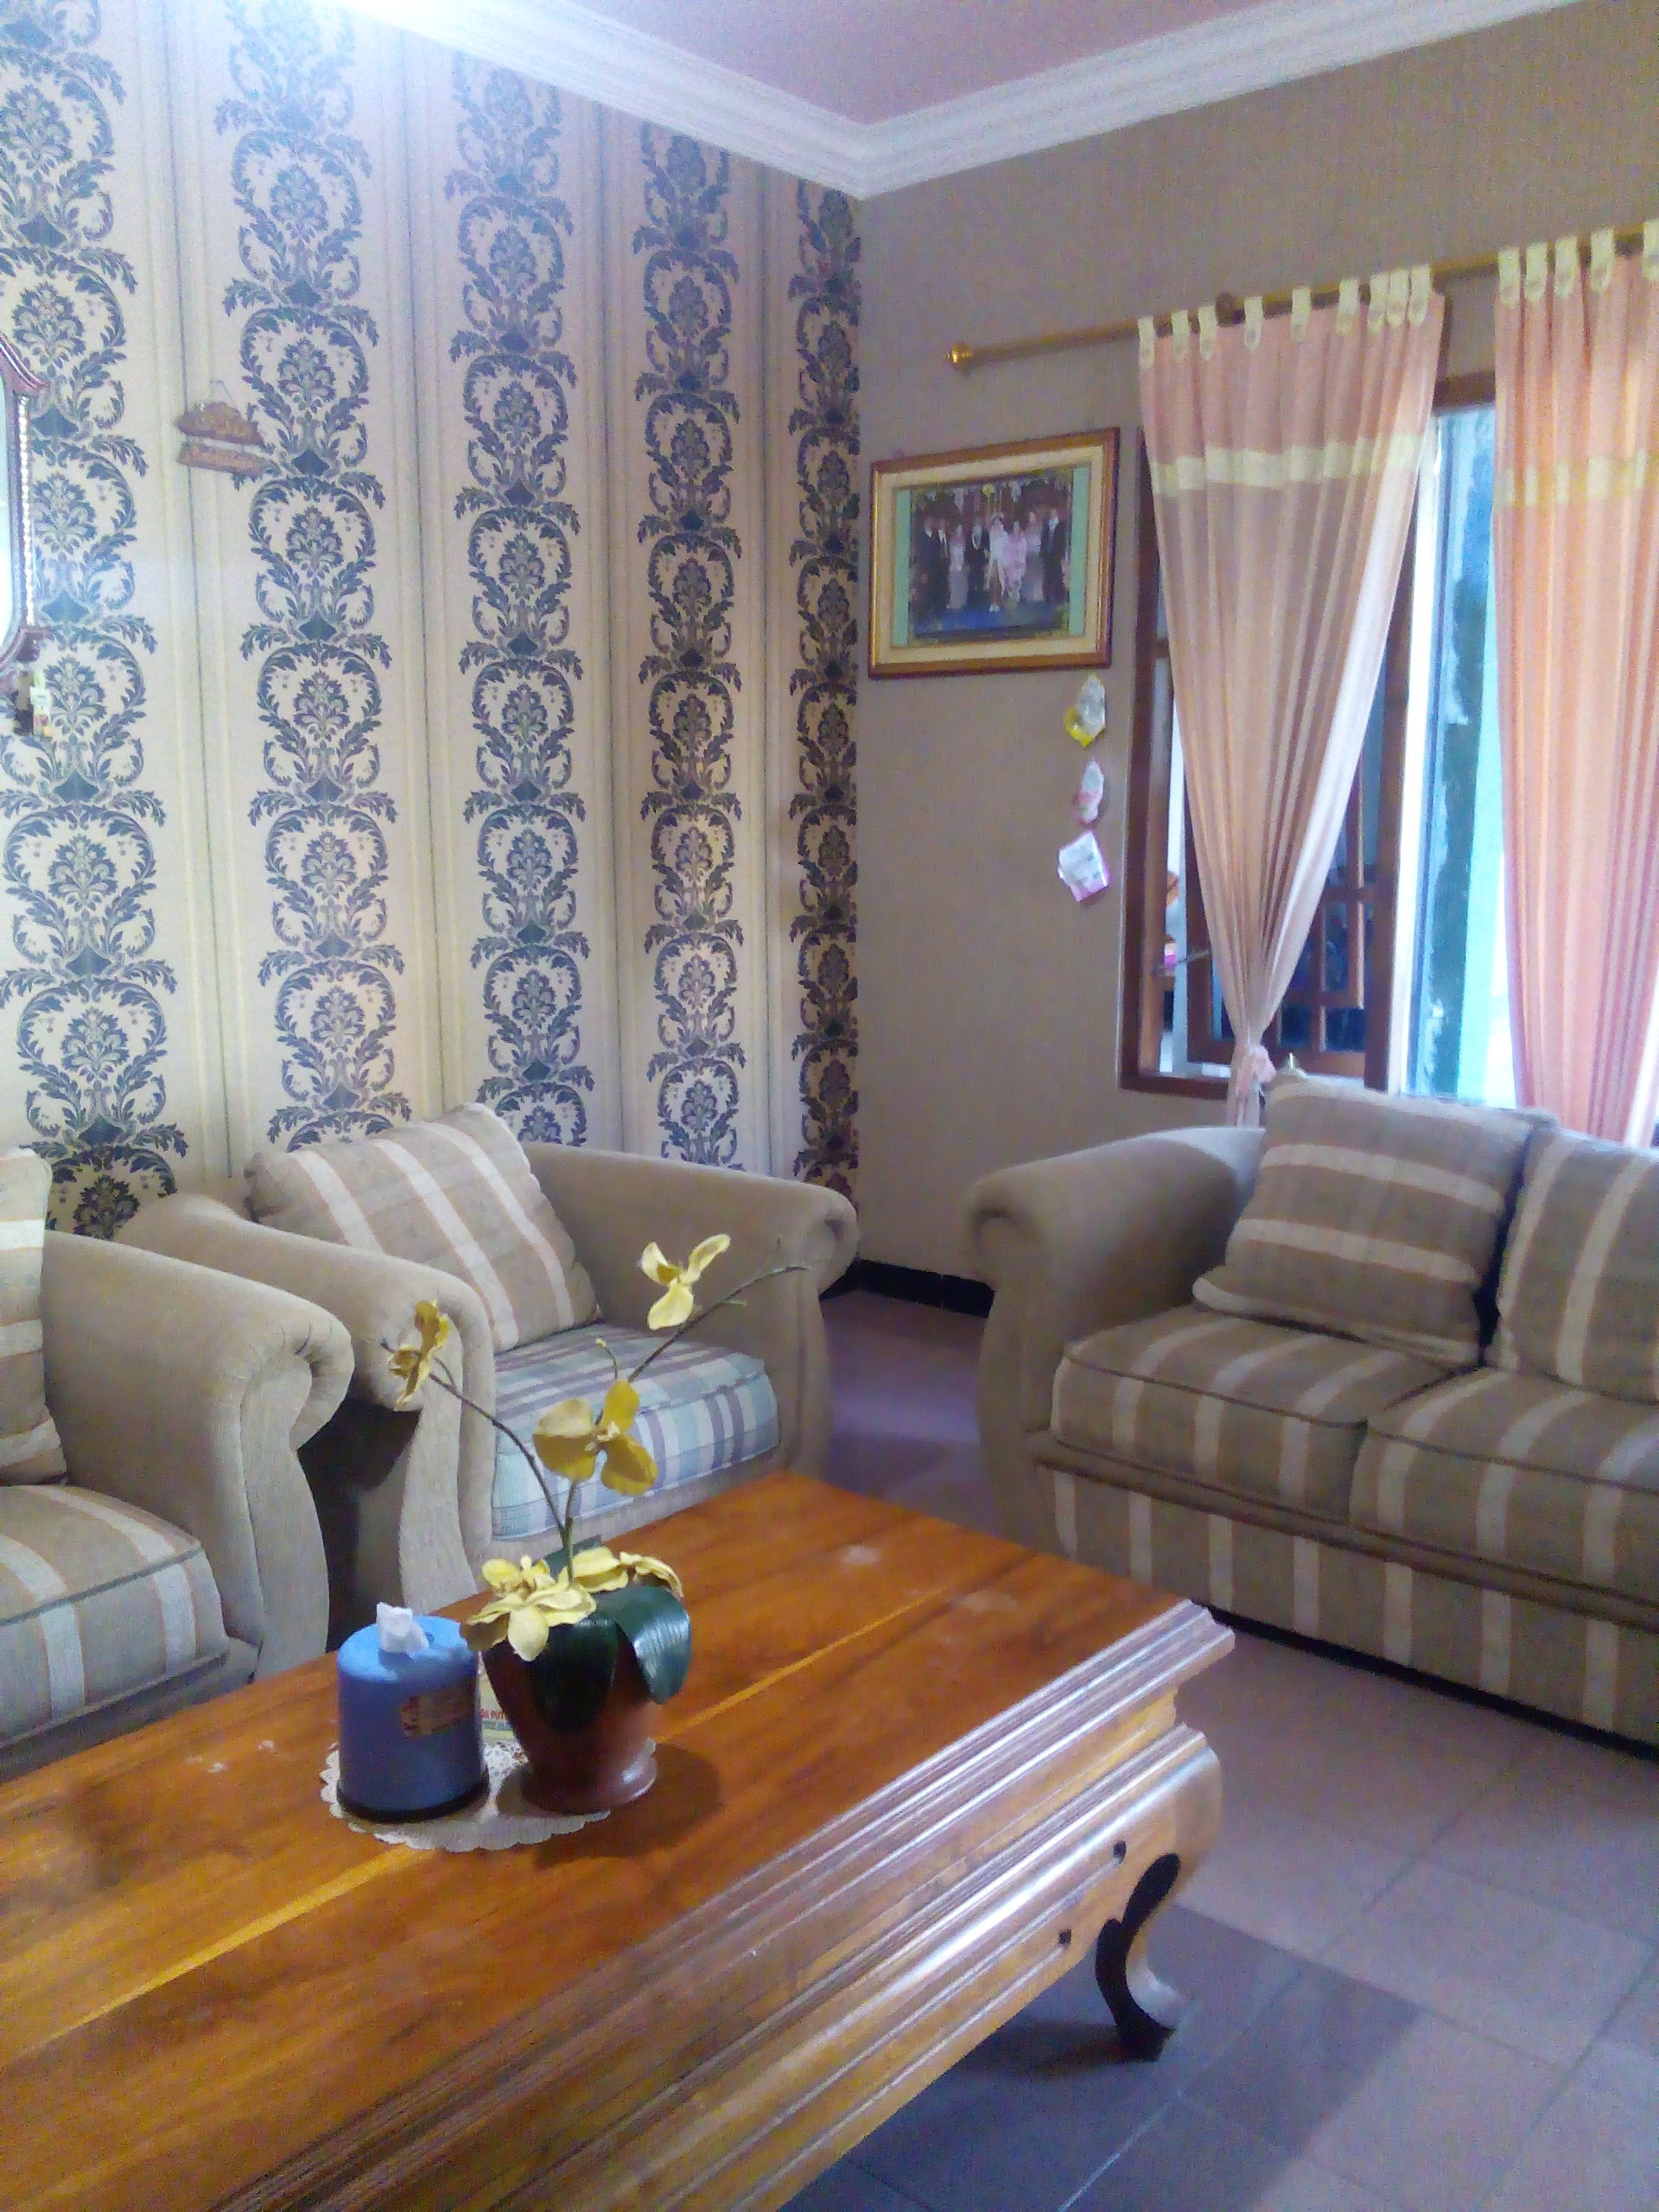 wallpaper dinding kamar tidur romantis,living room,room,property,furniture,interior design